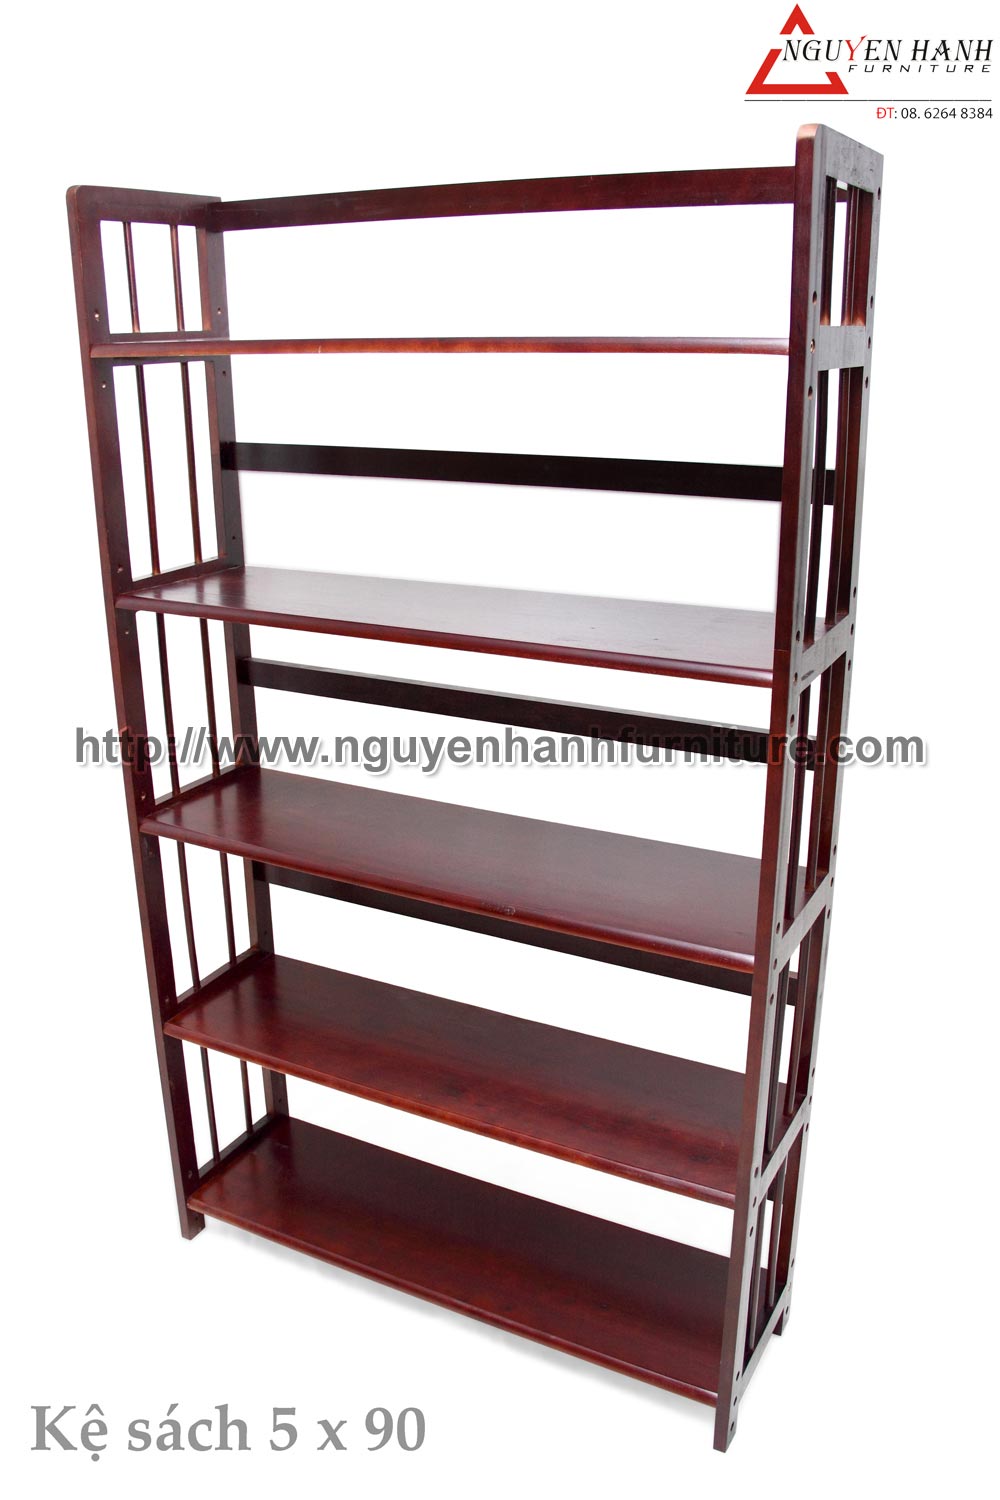 Name product: 5 storey Adjustable Bookshelf 90 (brown) - Dimensions: 93 x 28 x 157 (H) - Description: Wood natural rubber